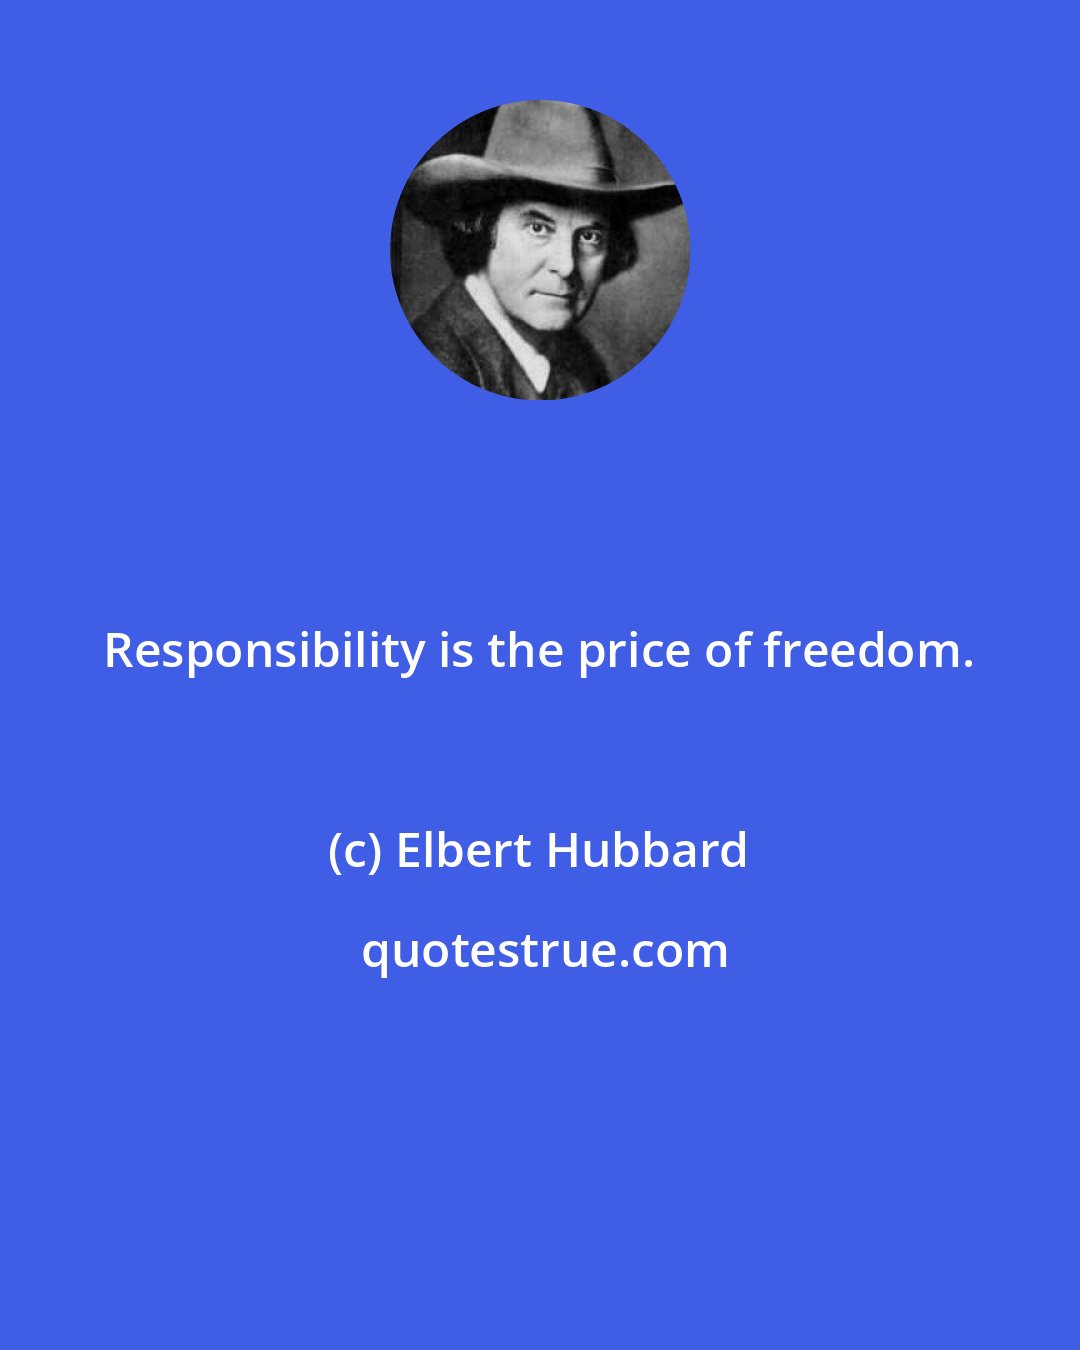 Elbert Hubbard: Responsibility is the price of freedom.